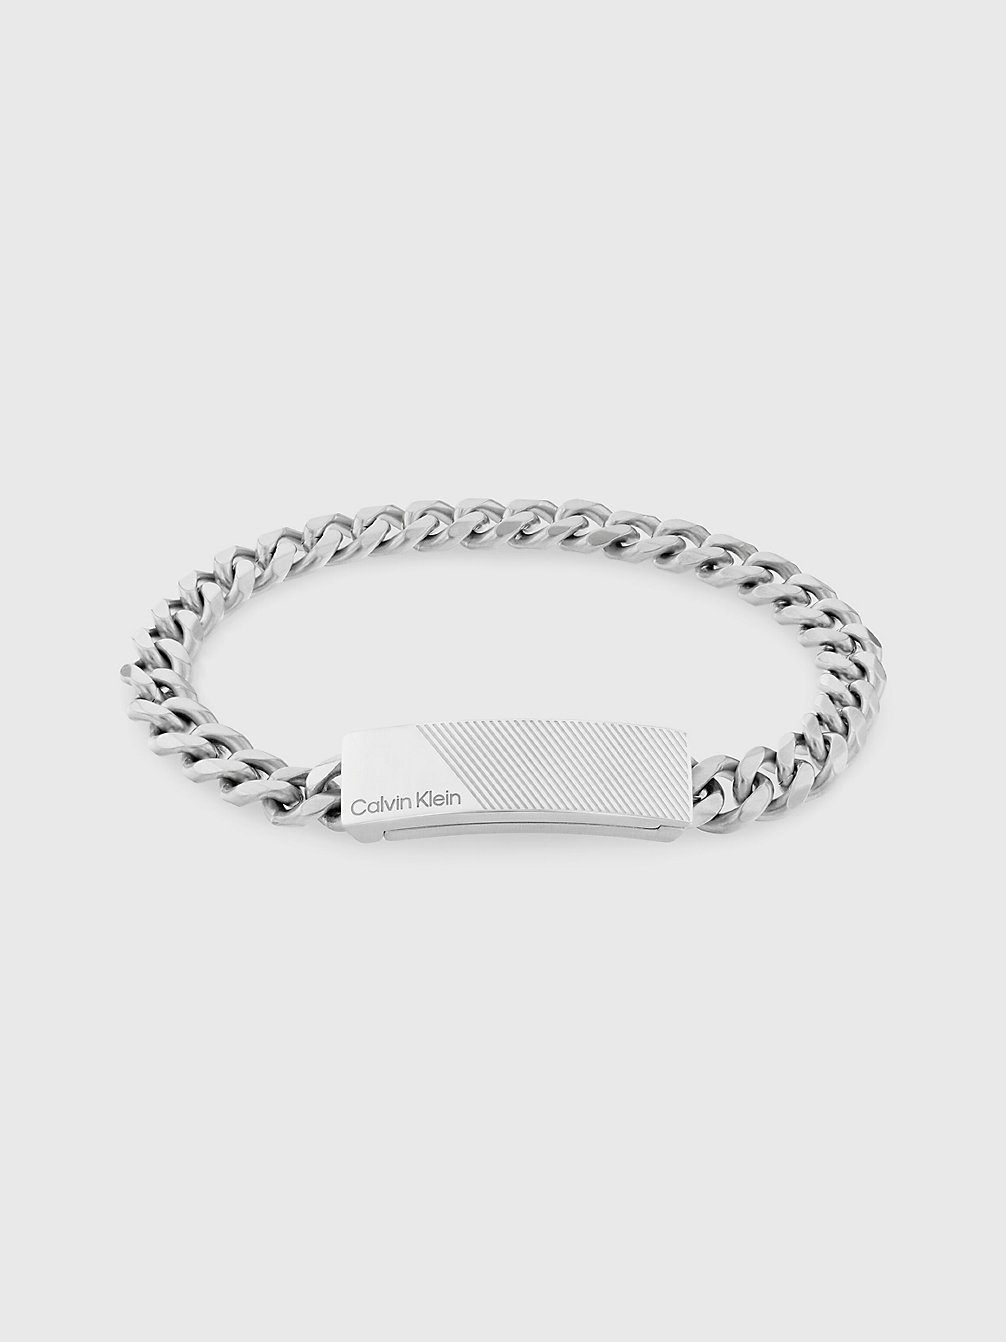 SILVER Bracelet - Architectural Lines undefined men Calvin Klein